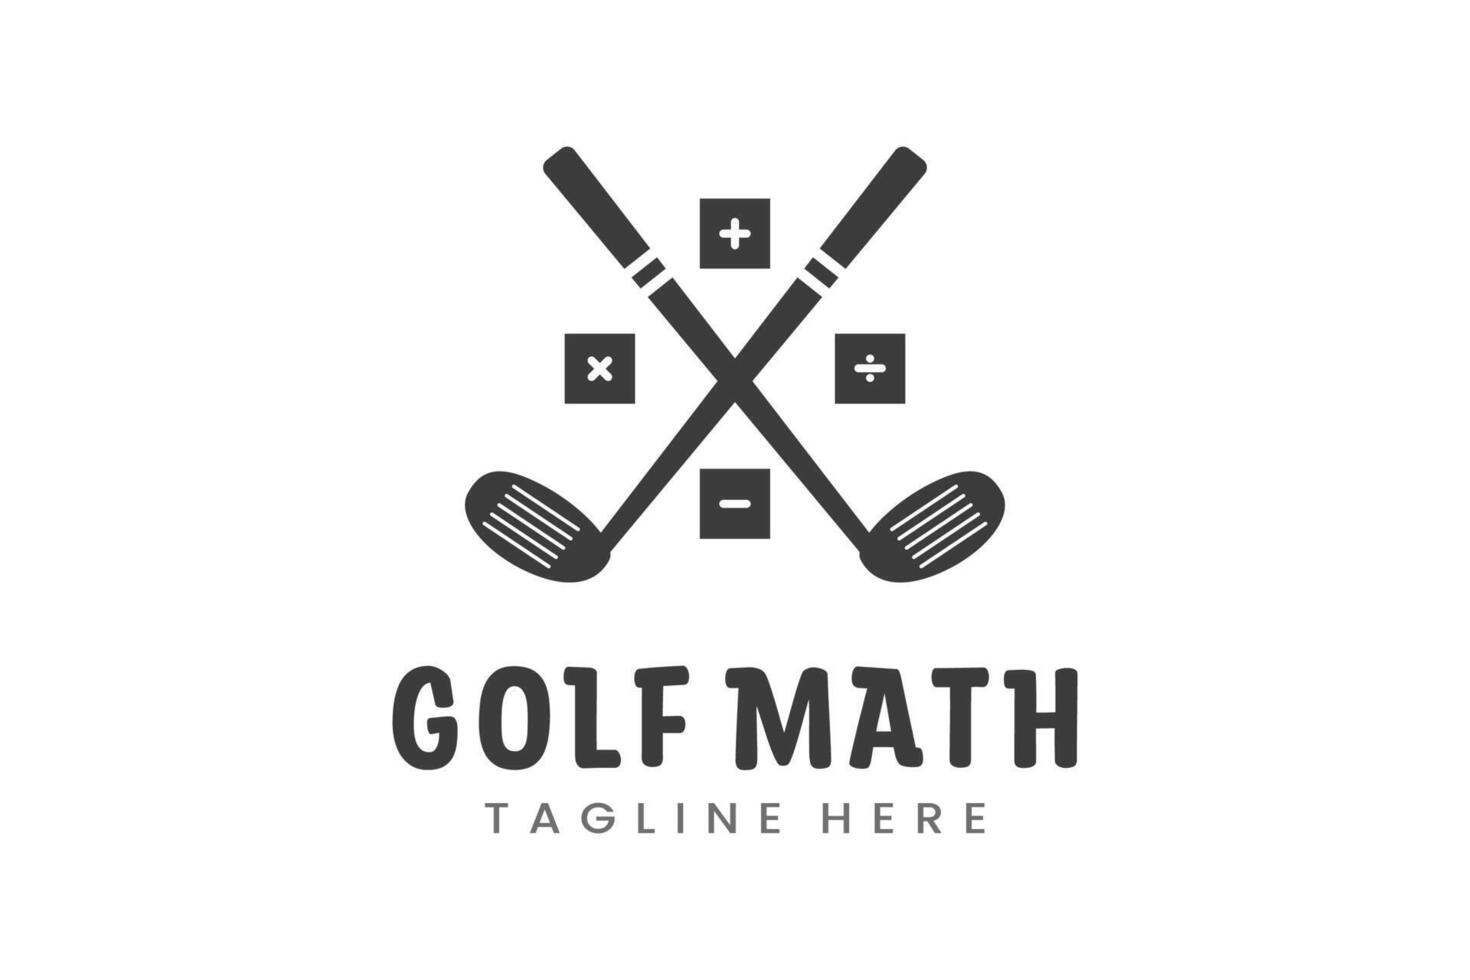 moderno plano diseño único matemáticas golf pelota club gráfico logo modelo minimalista golf logo vector